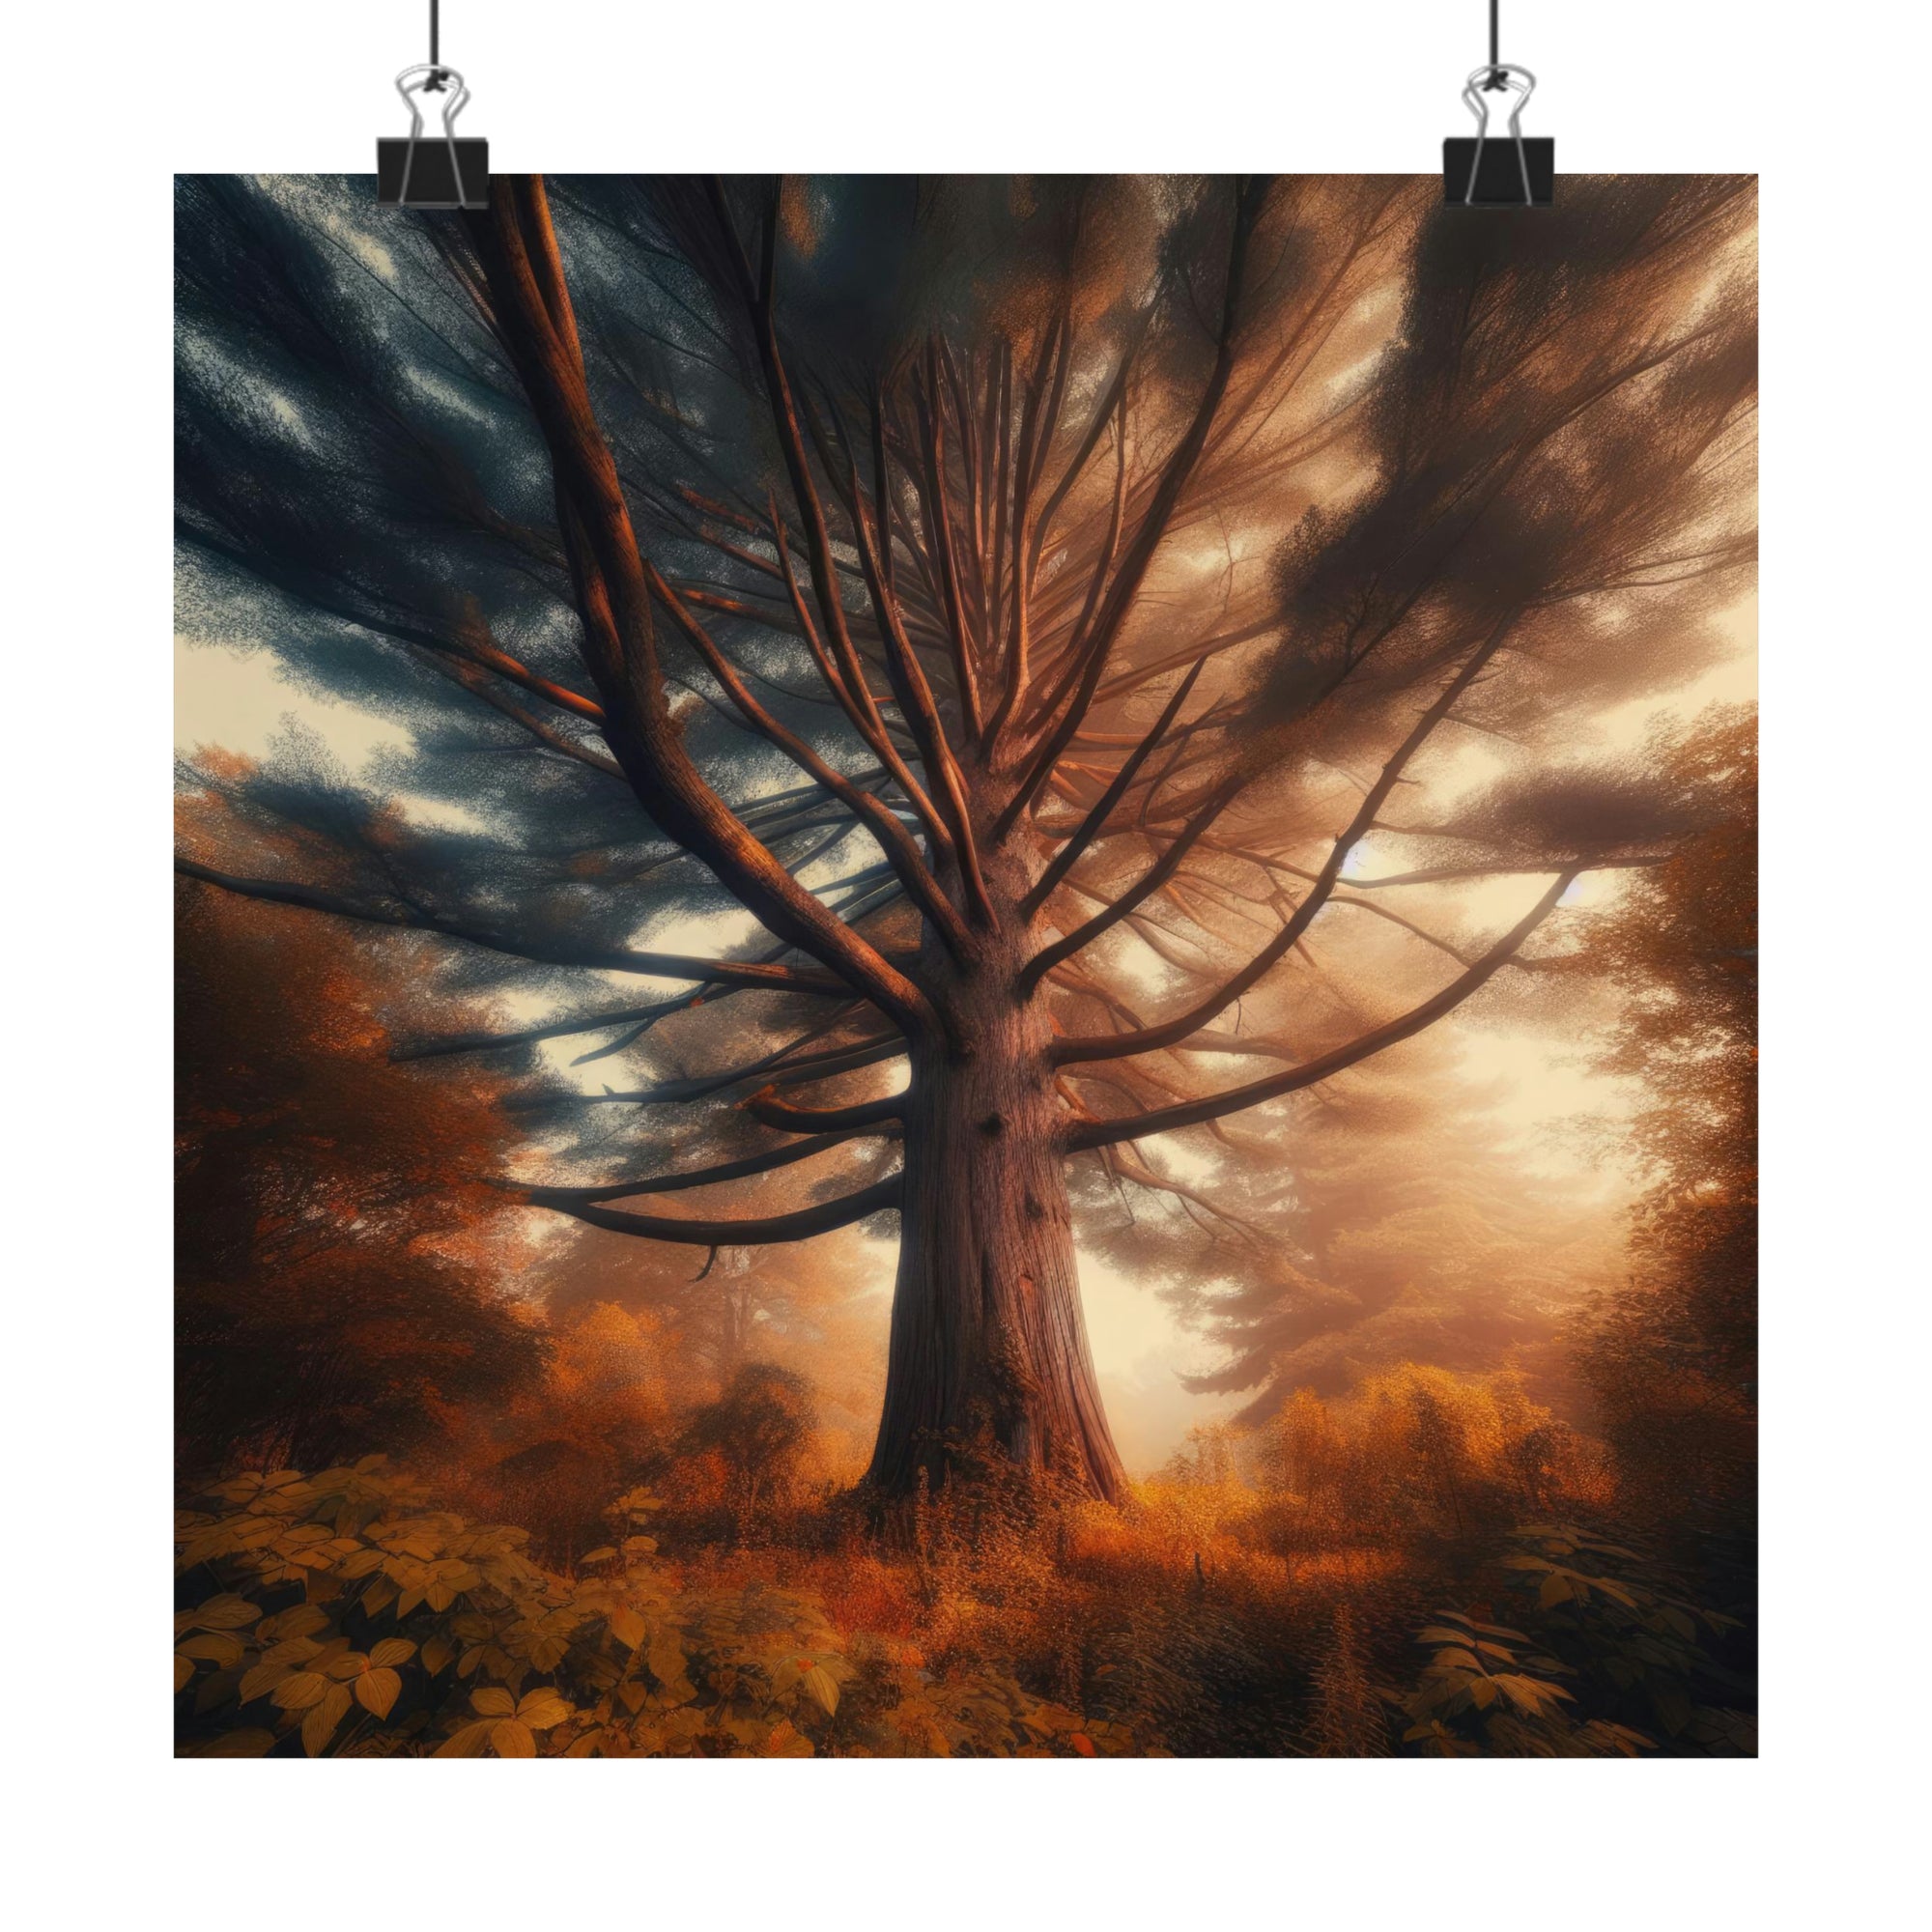 The Missouri Pine's Autumn Splendor Poster